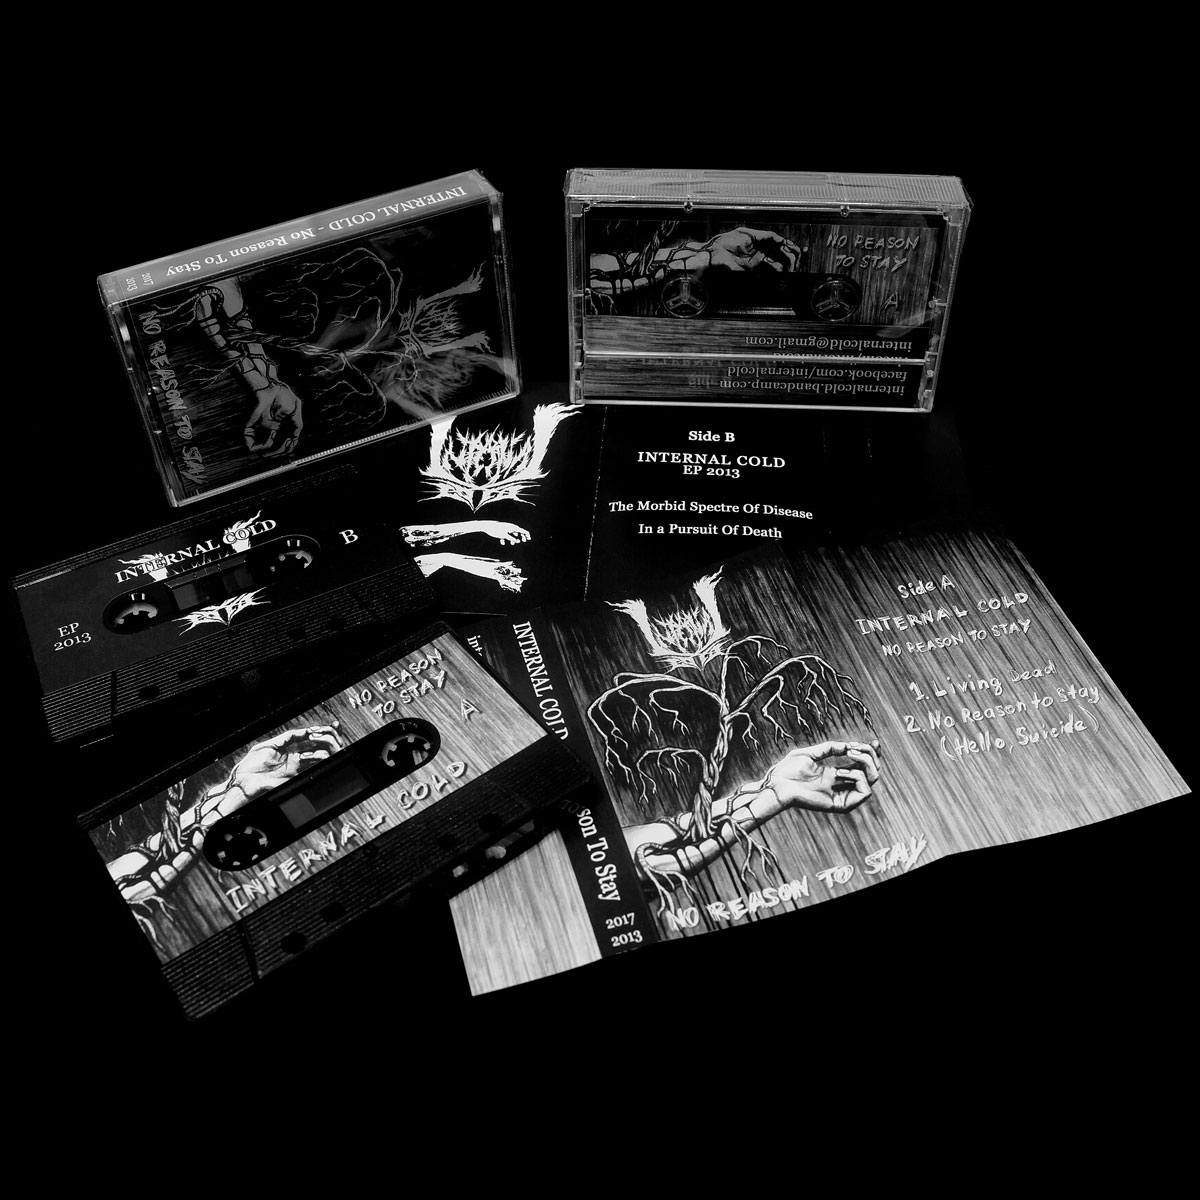 'Perception of death' CD